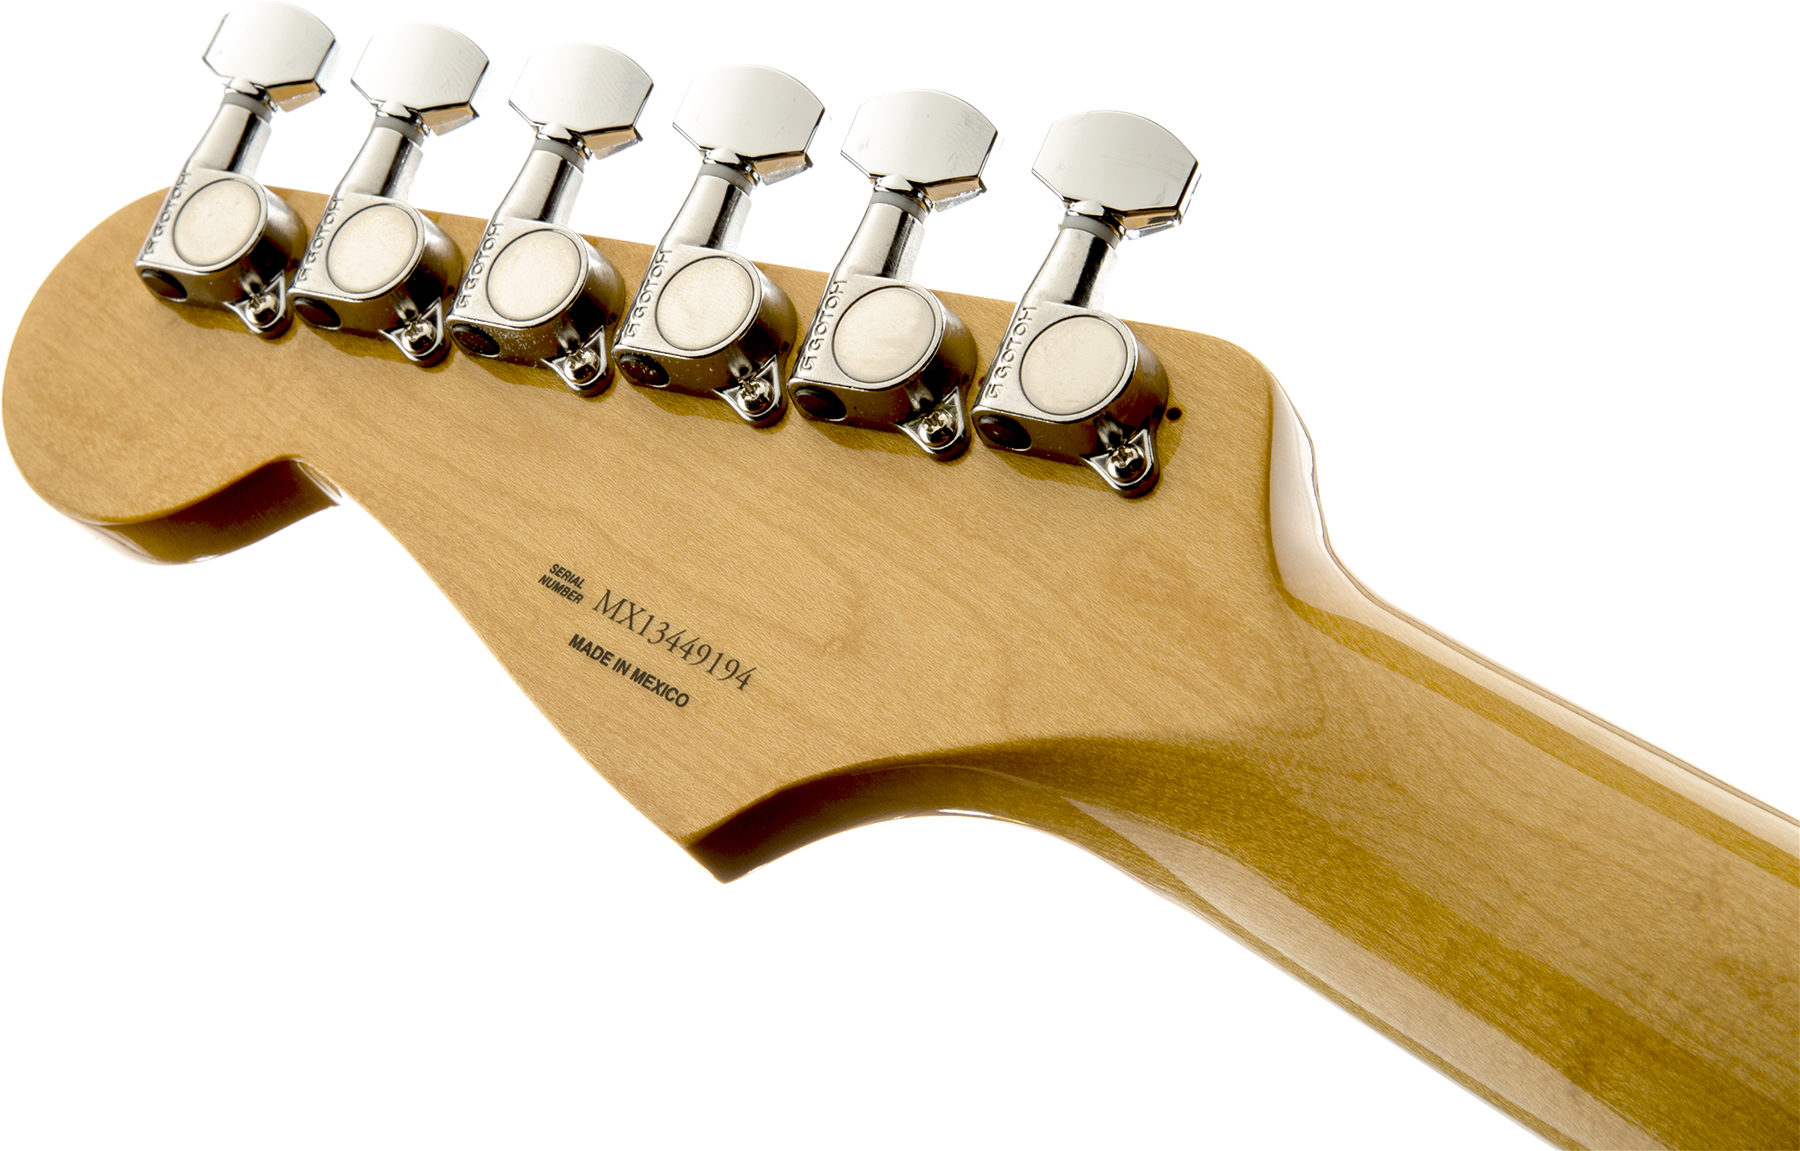 Fender Kurt Cobain Jaguar Mex Hh Trem Rw - 3-color Sunburst - Guitarra electrica retro rock - Variation 3